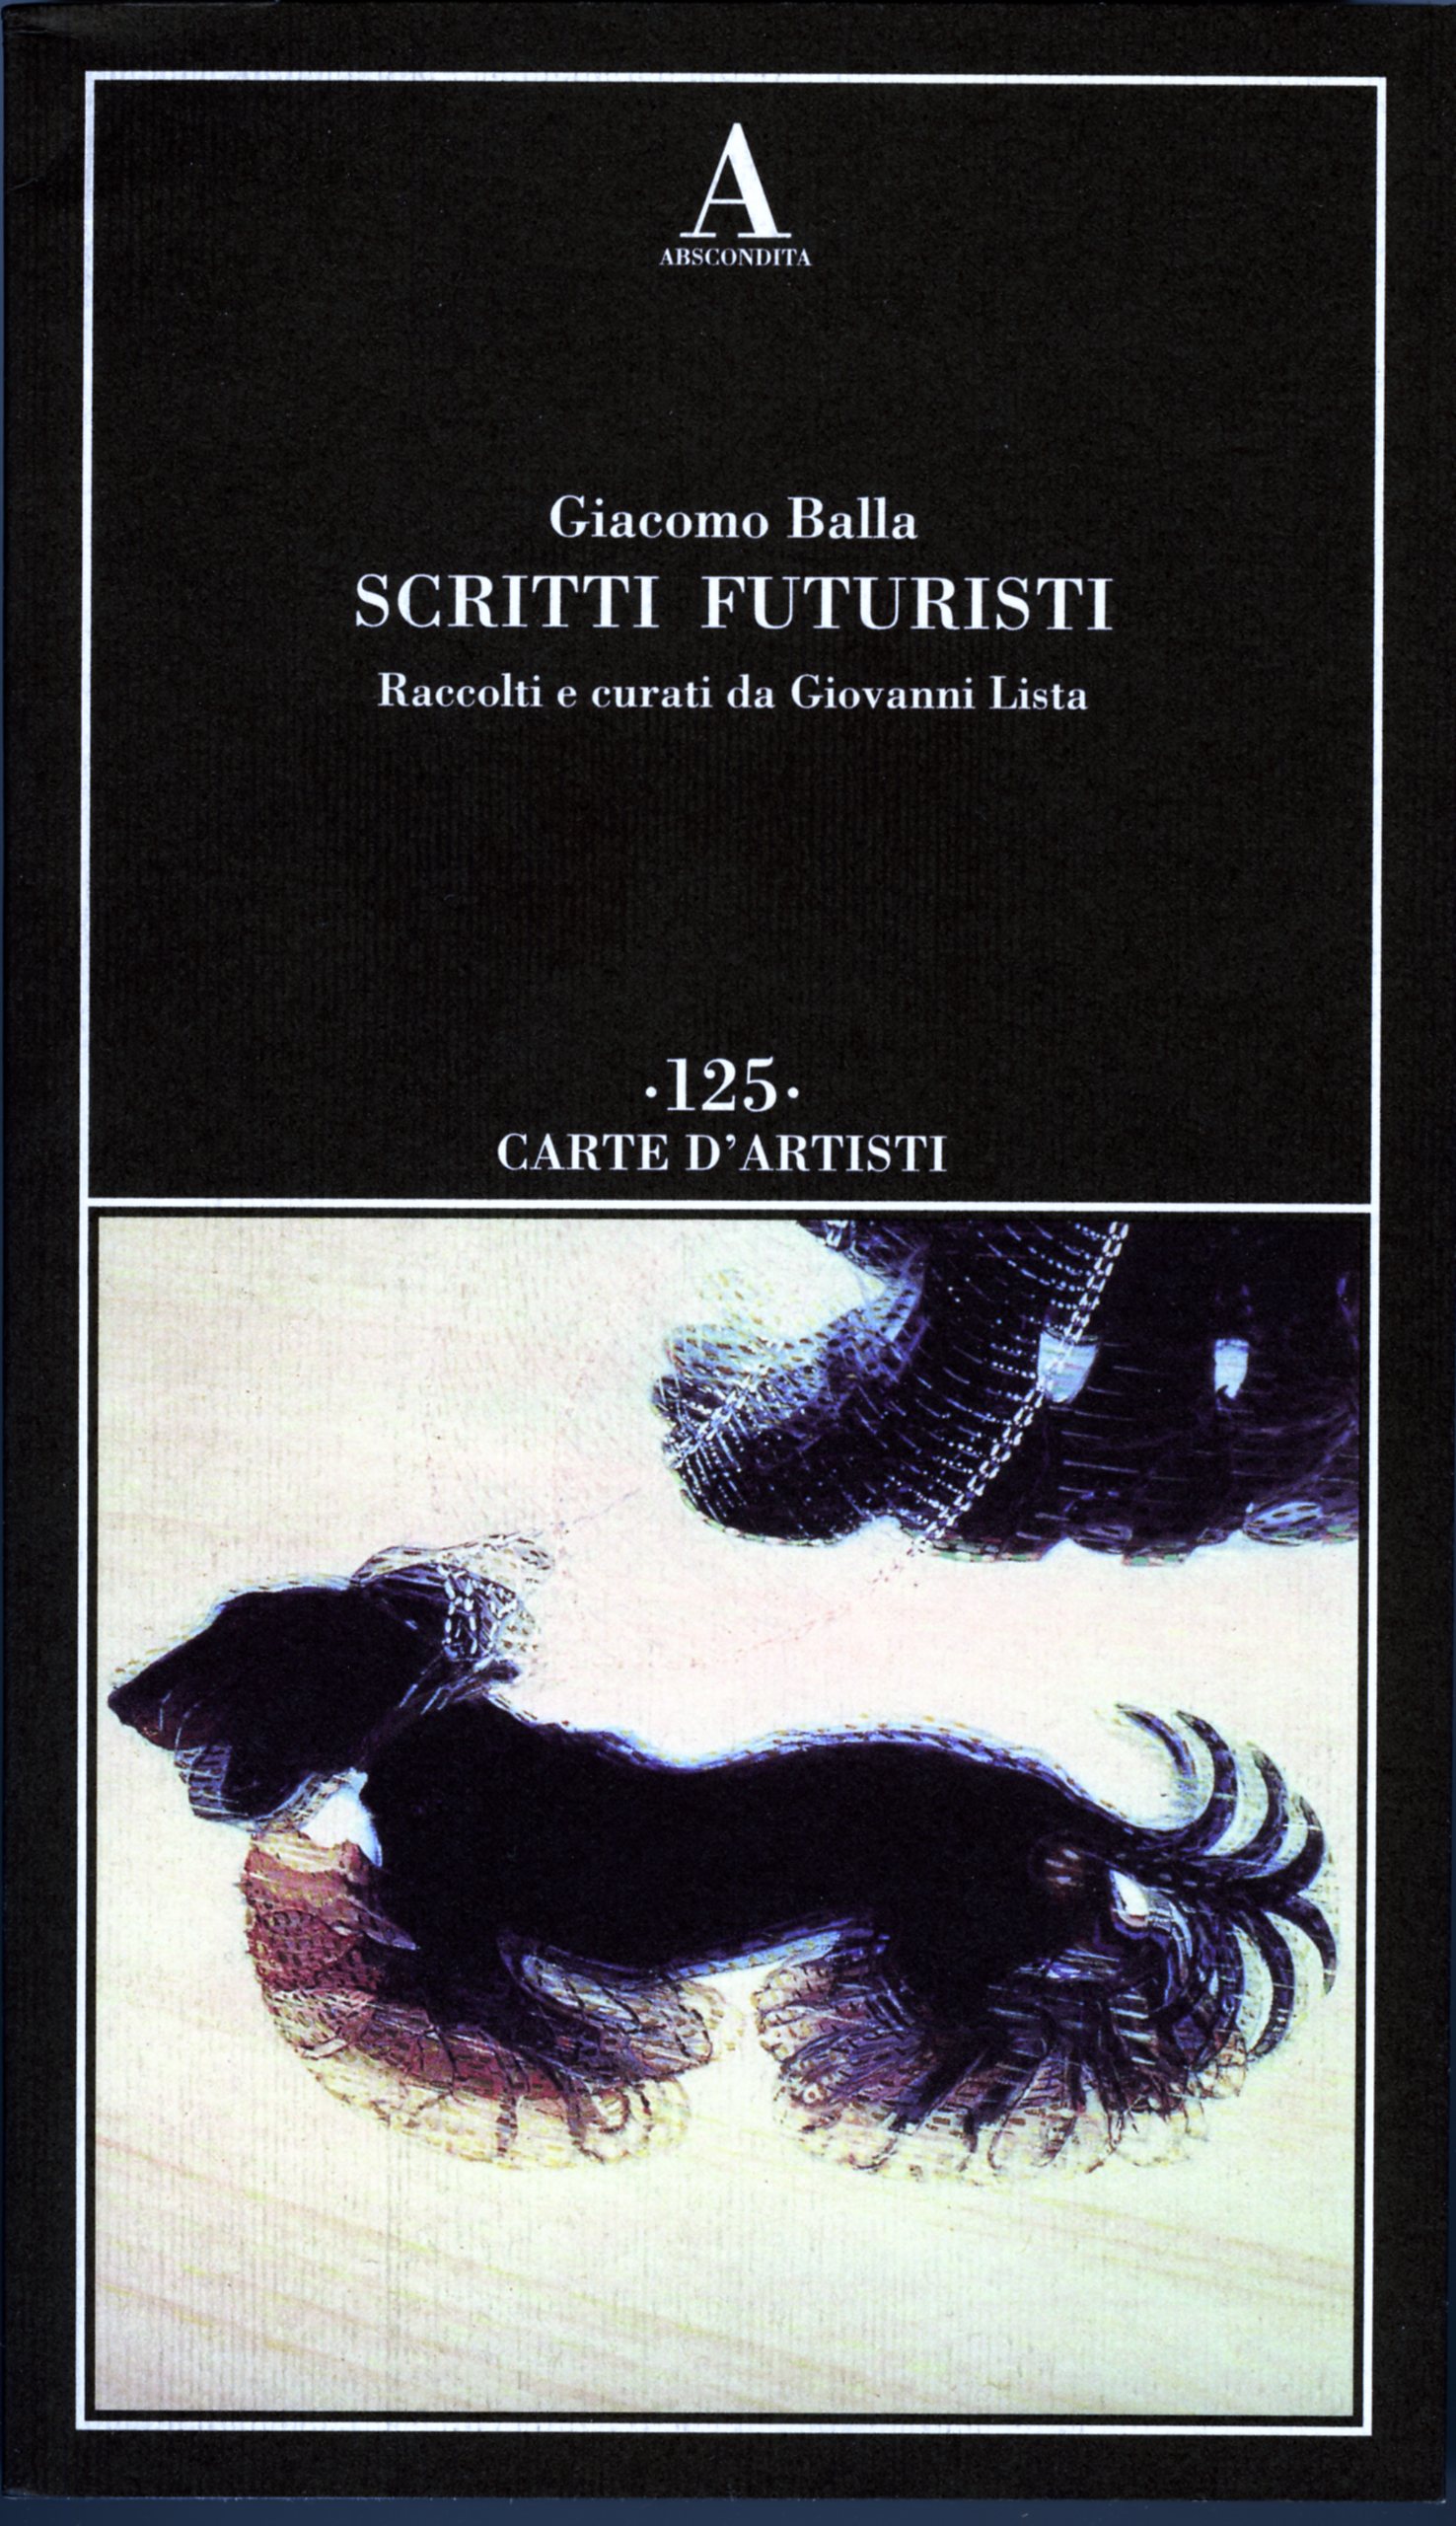 ‘Giacomo Balla, Scritti futuristi’ published